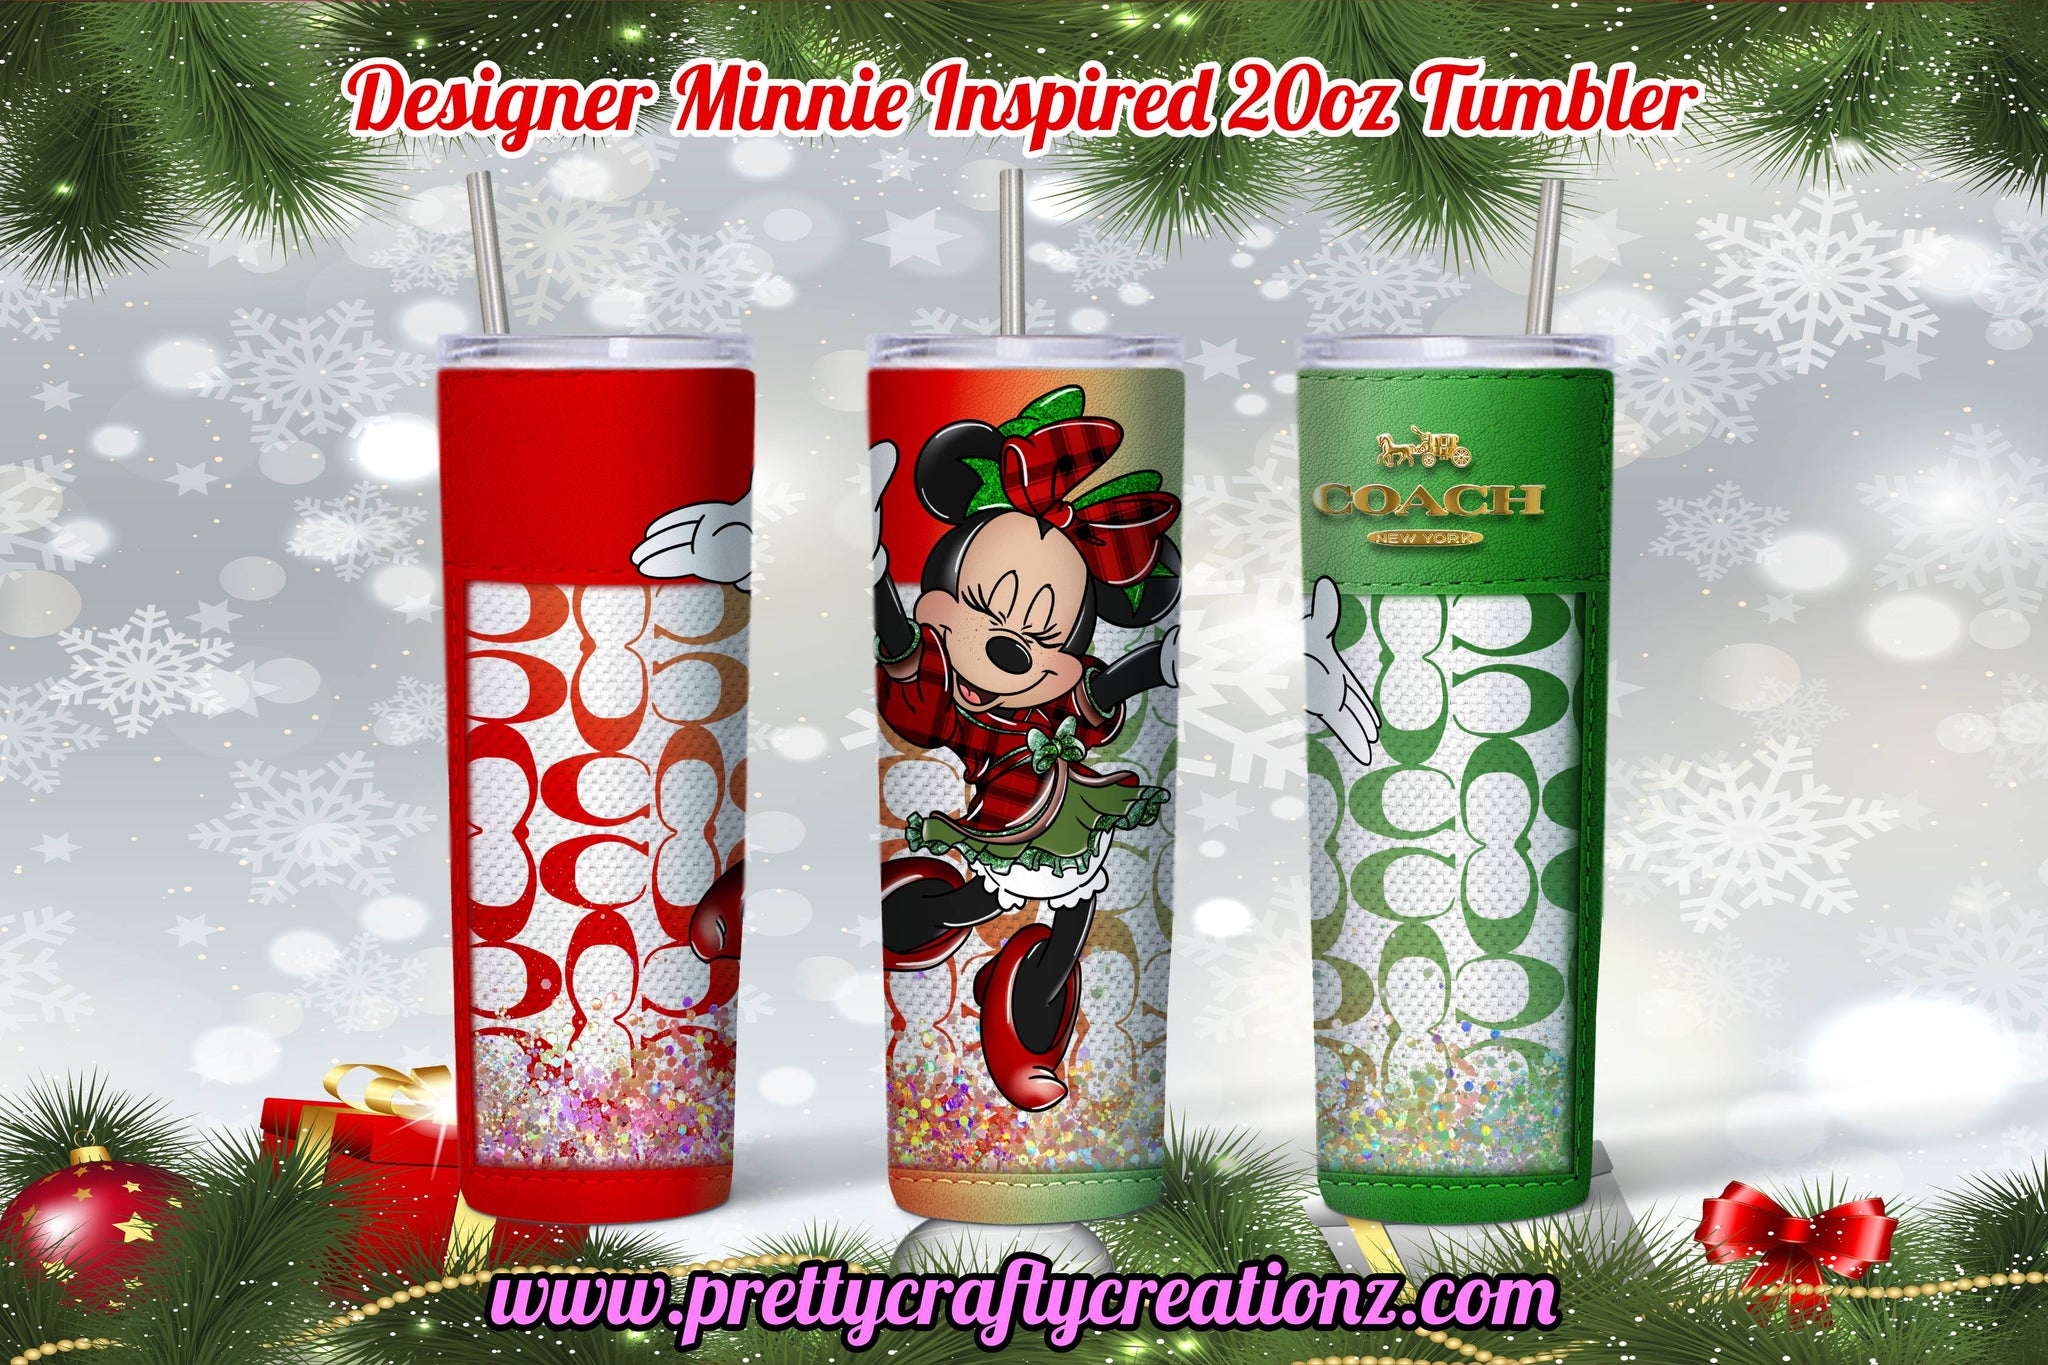 Designer Minnie Inspired Tumbler